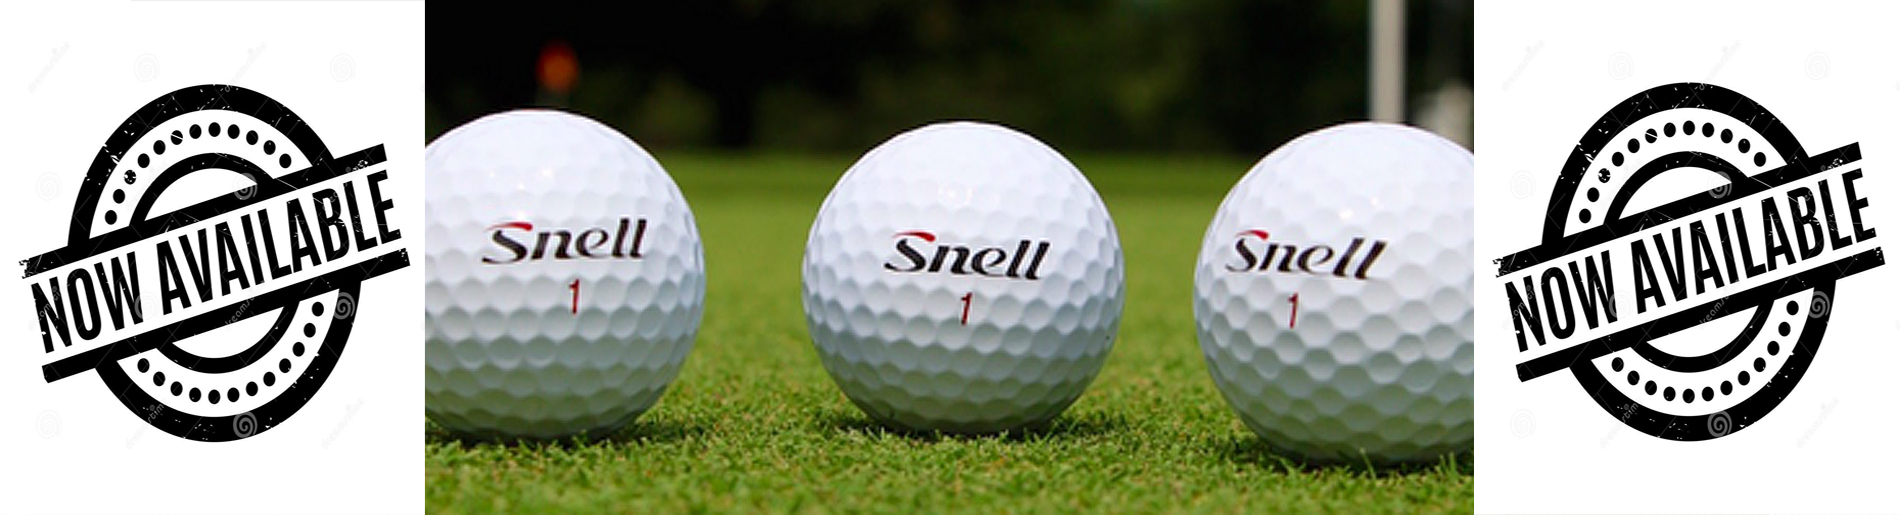 Snell golf balls